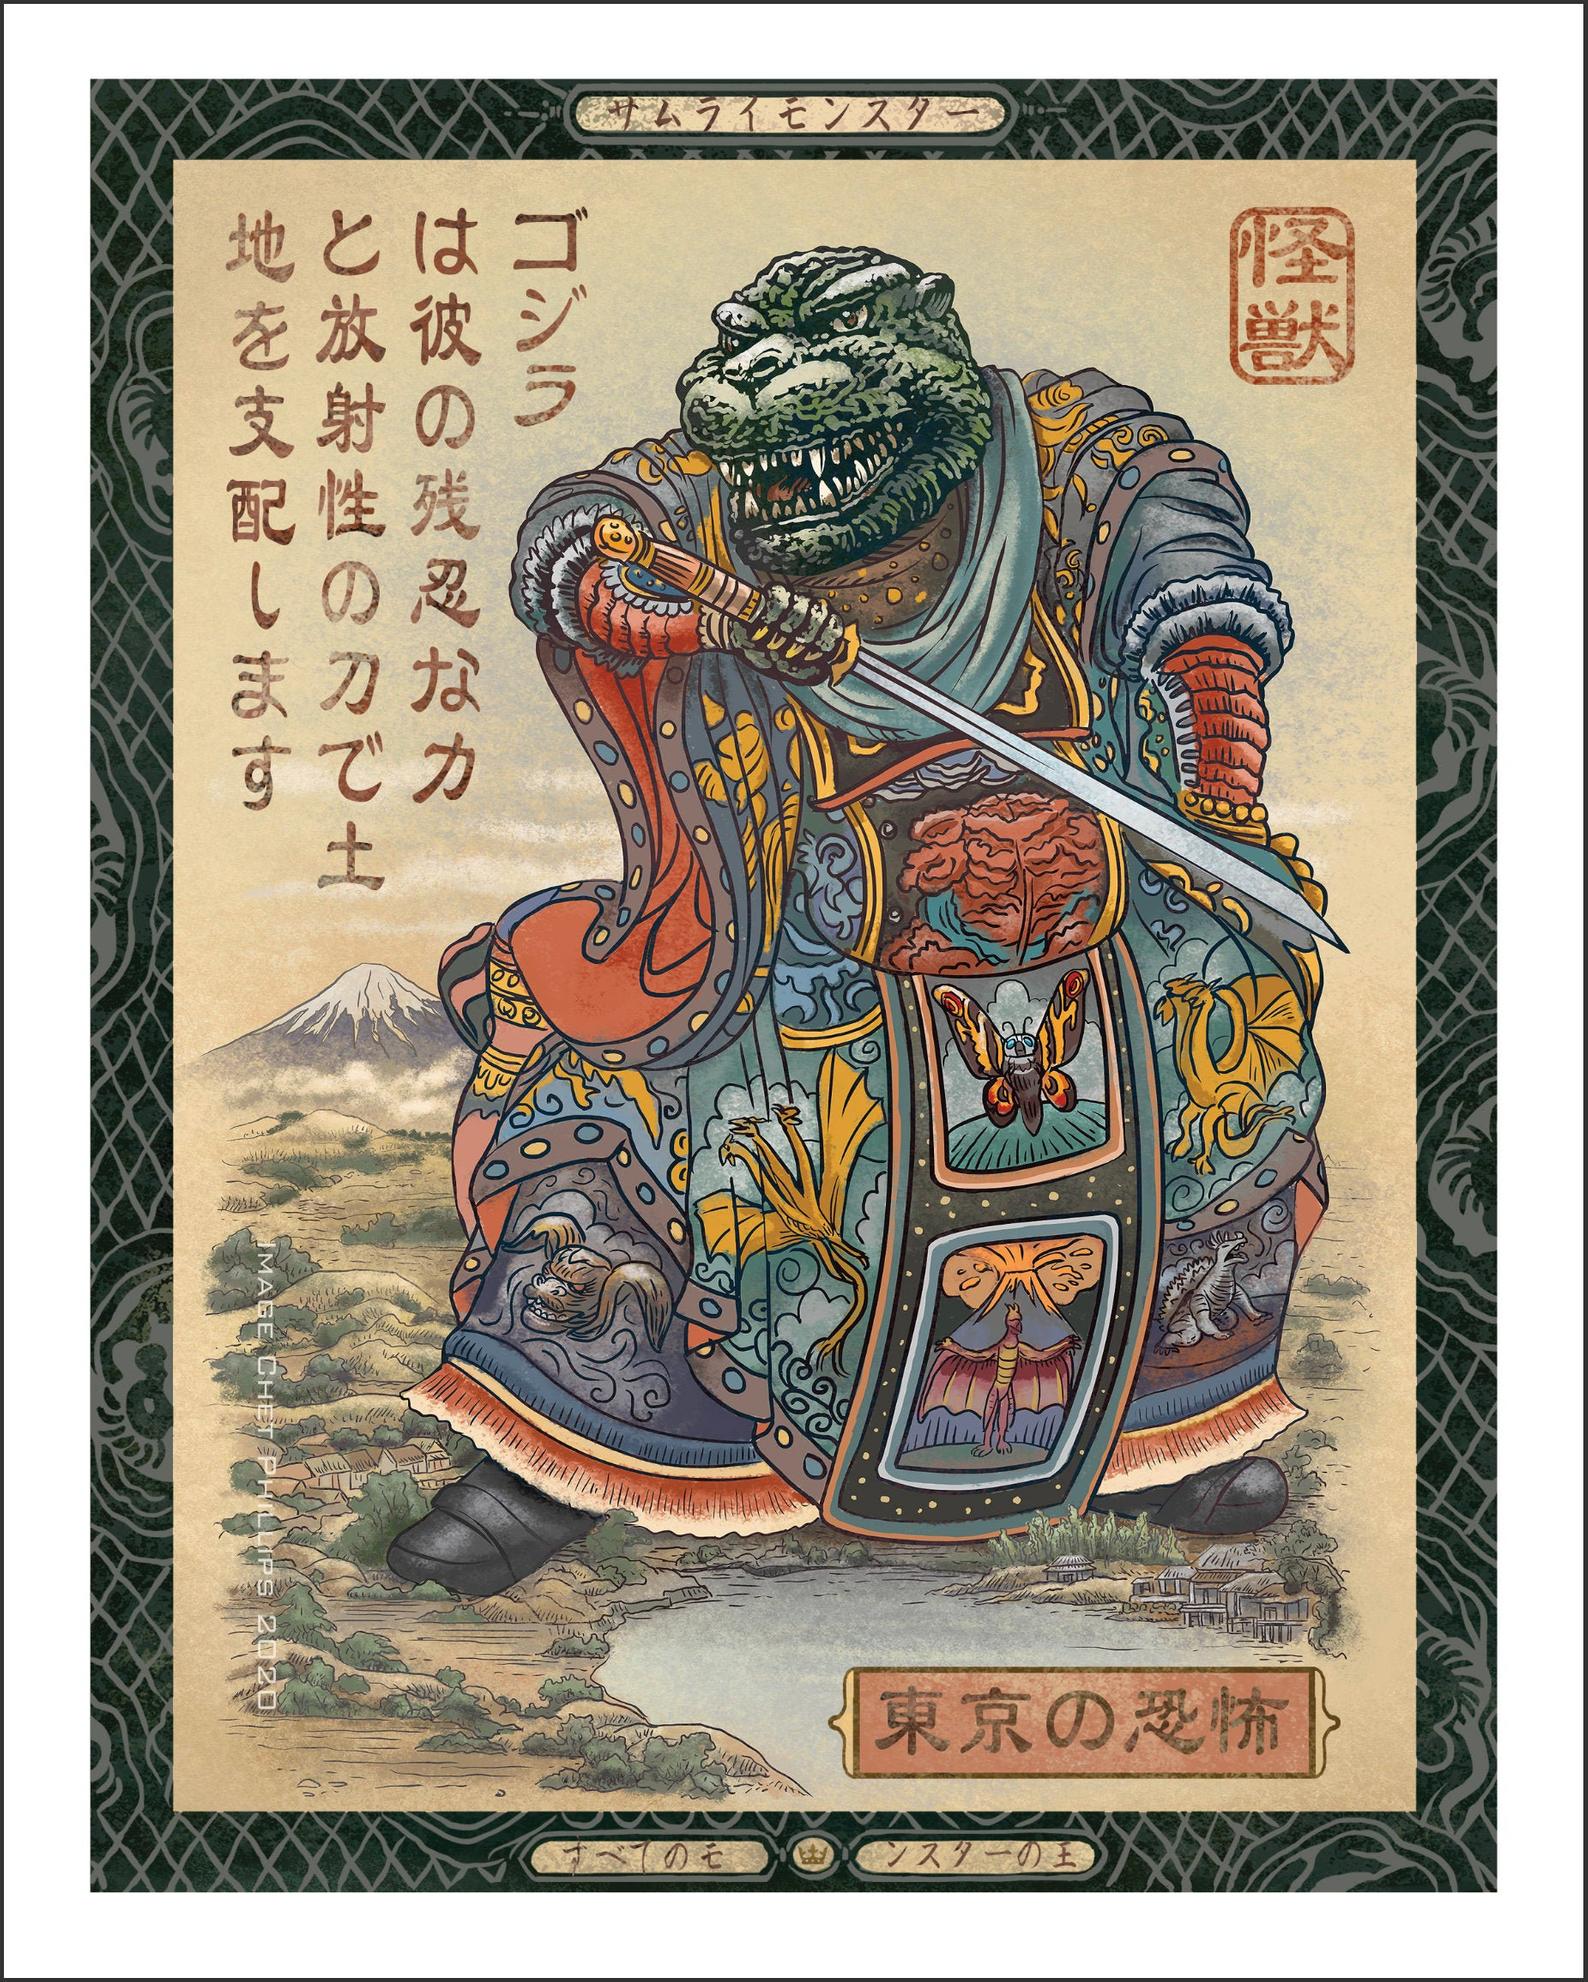 King of the Monsters Samurai 8 x 10 print